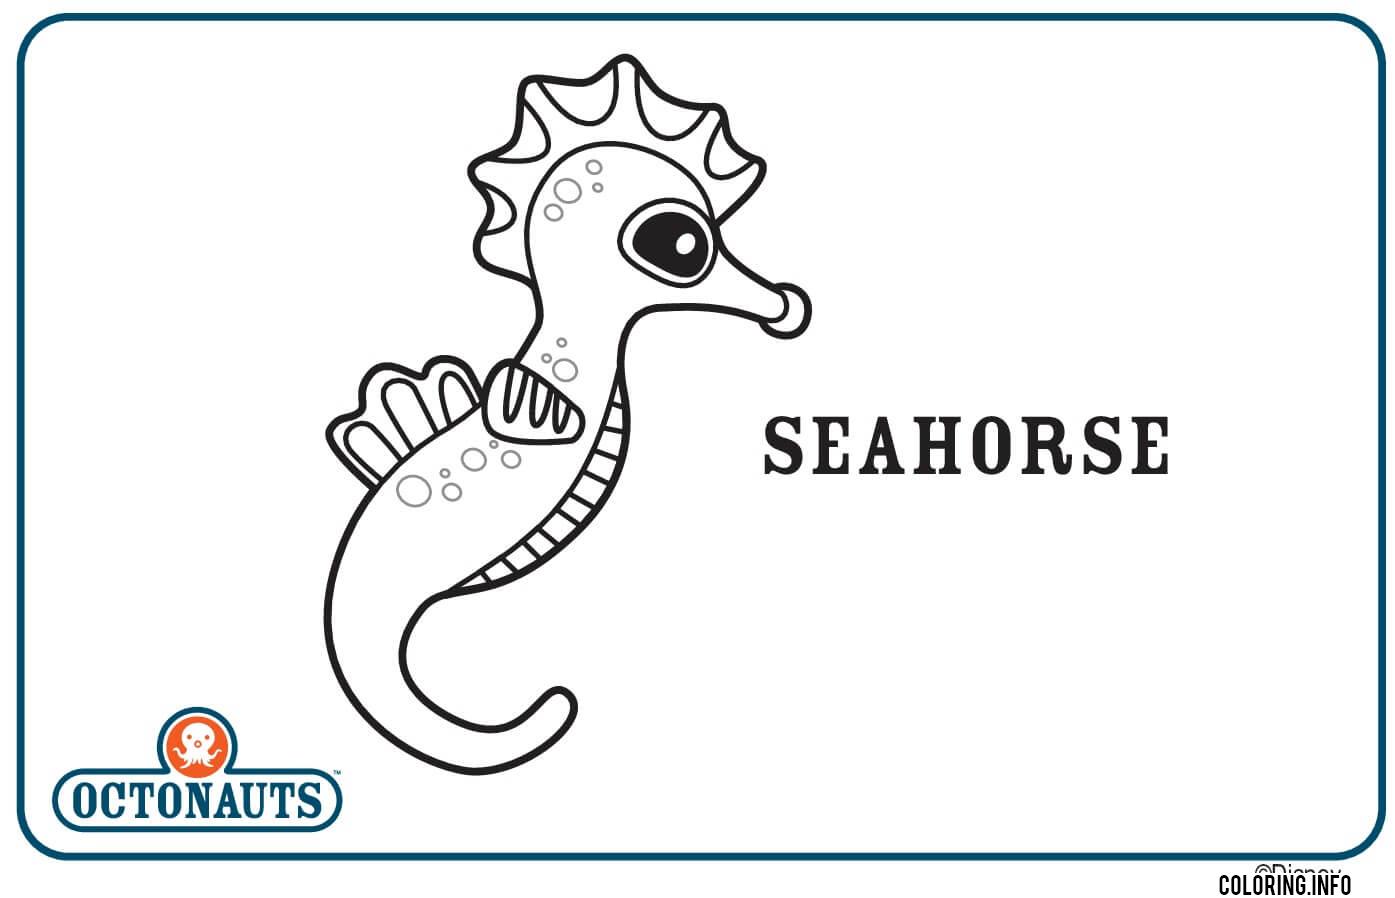 Seahourse Octonaut Creature coloring